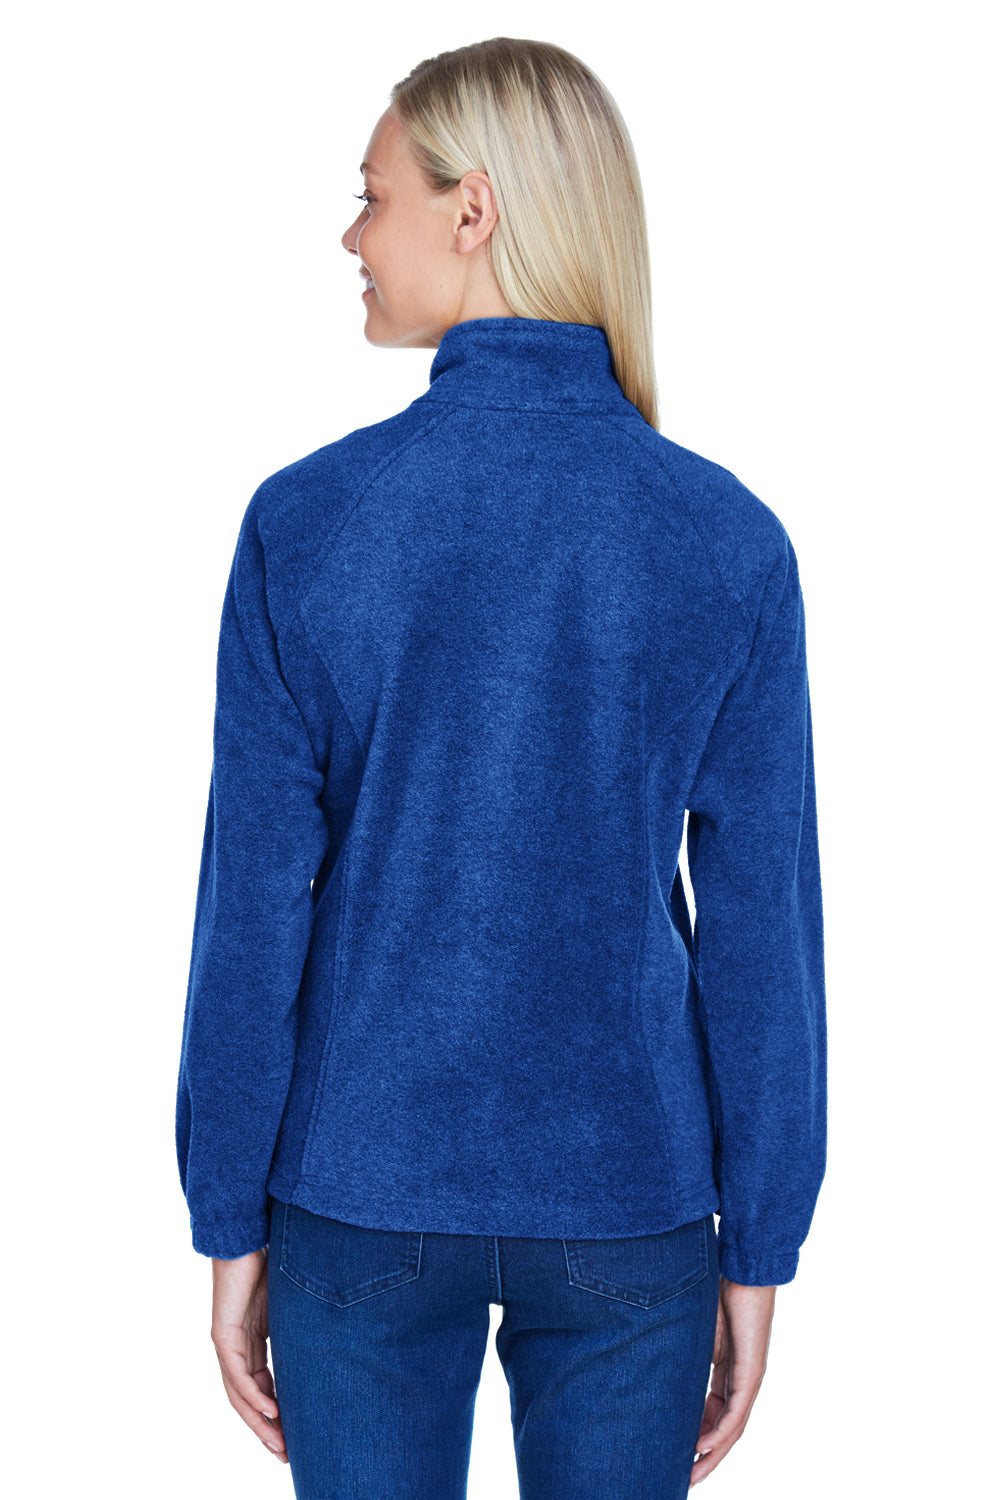 Harriton M990W Womens Full Zip Fleece Jacket Royal Blue Back